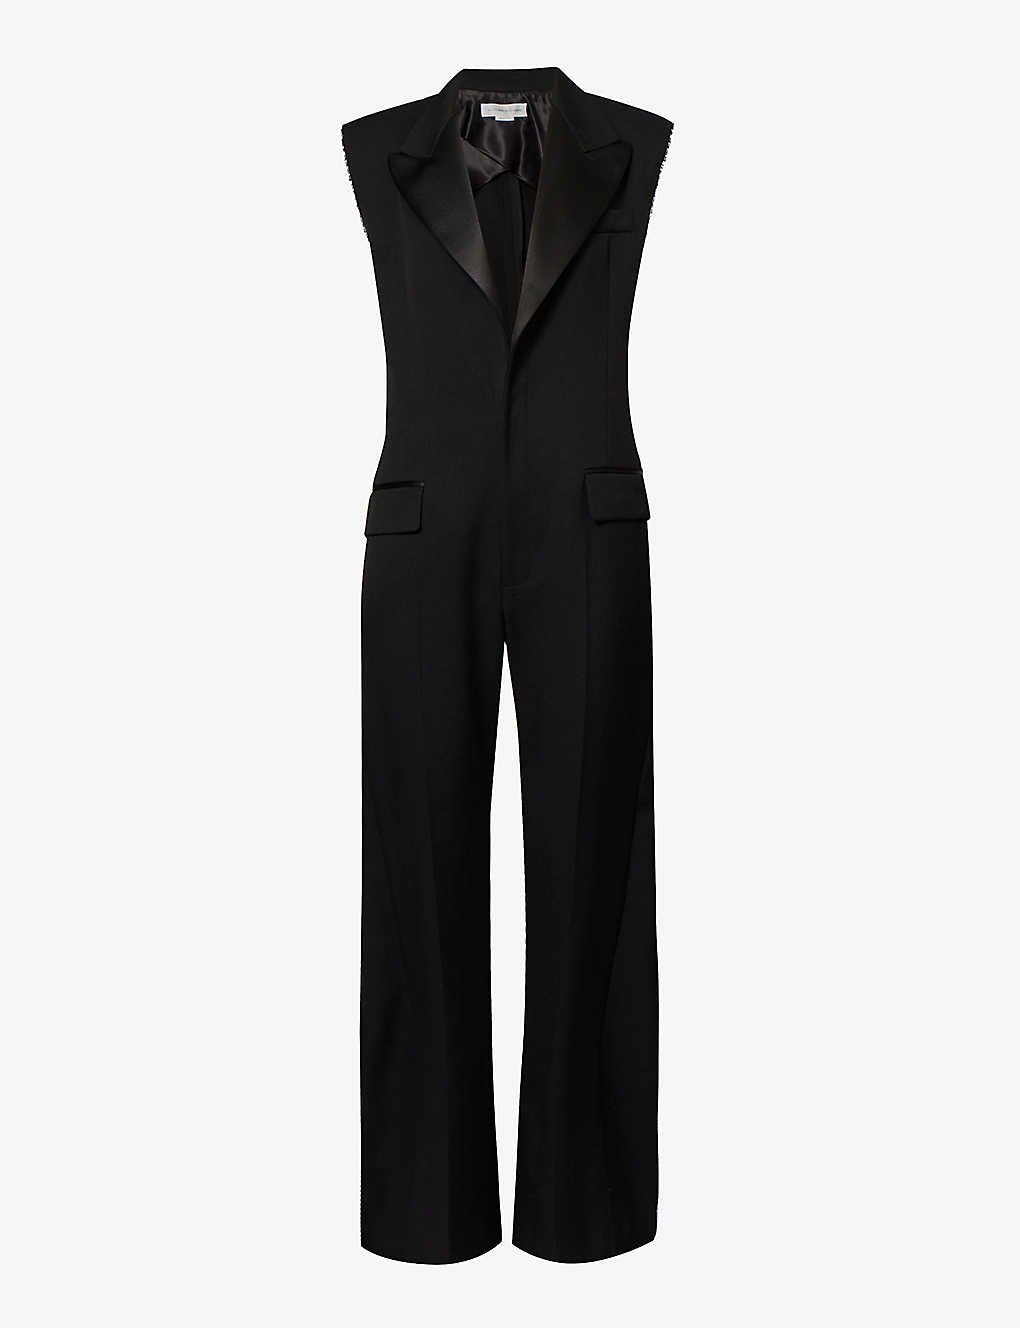 Shop Victoria Beckham Women's Black Satin-lapel Straight-leg Woven Tuxedo Jumpsuit